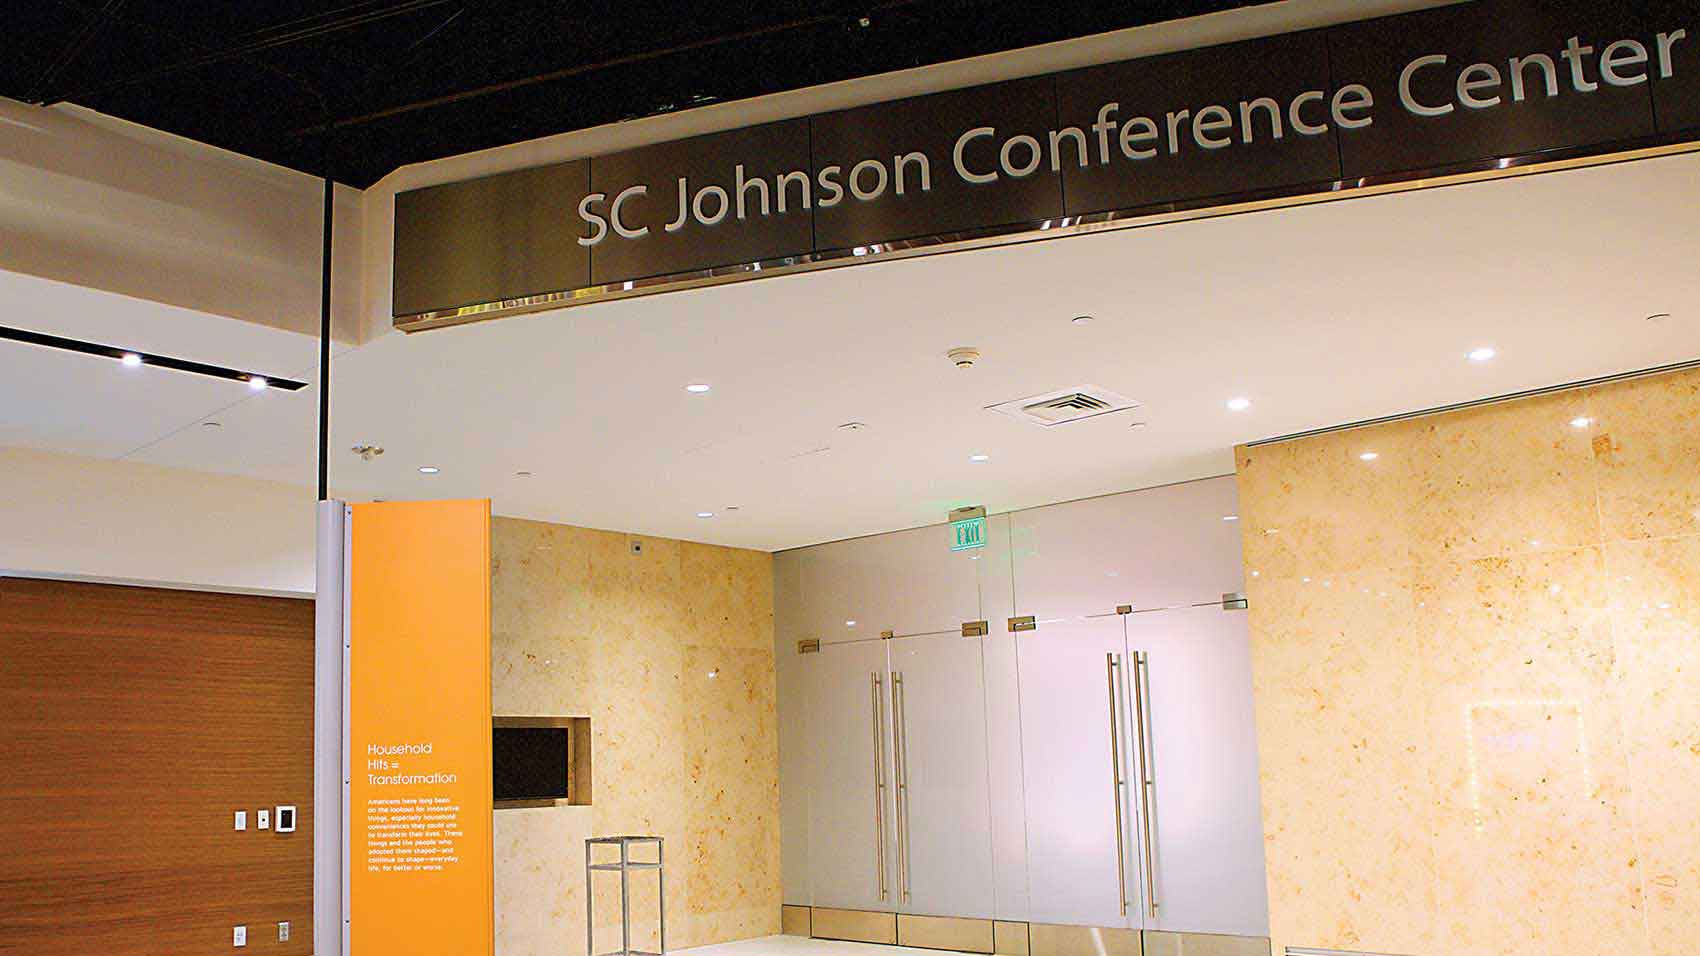 Smithsonian SC Johnson Conference Centre